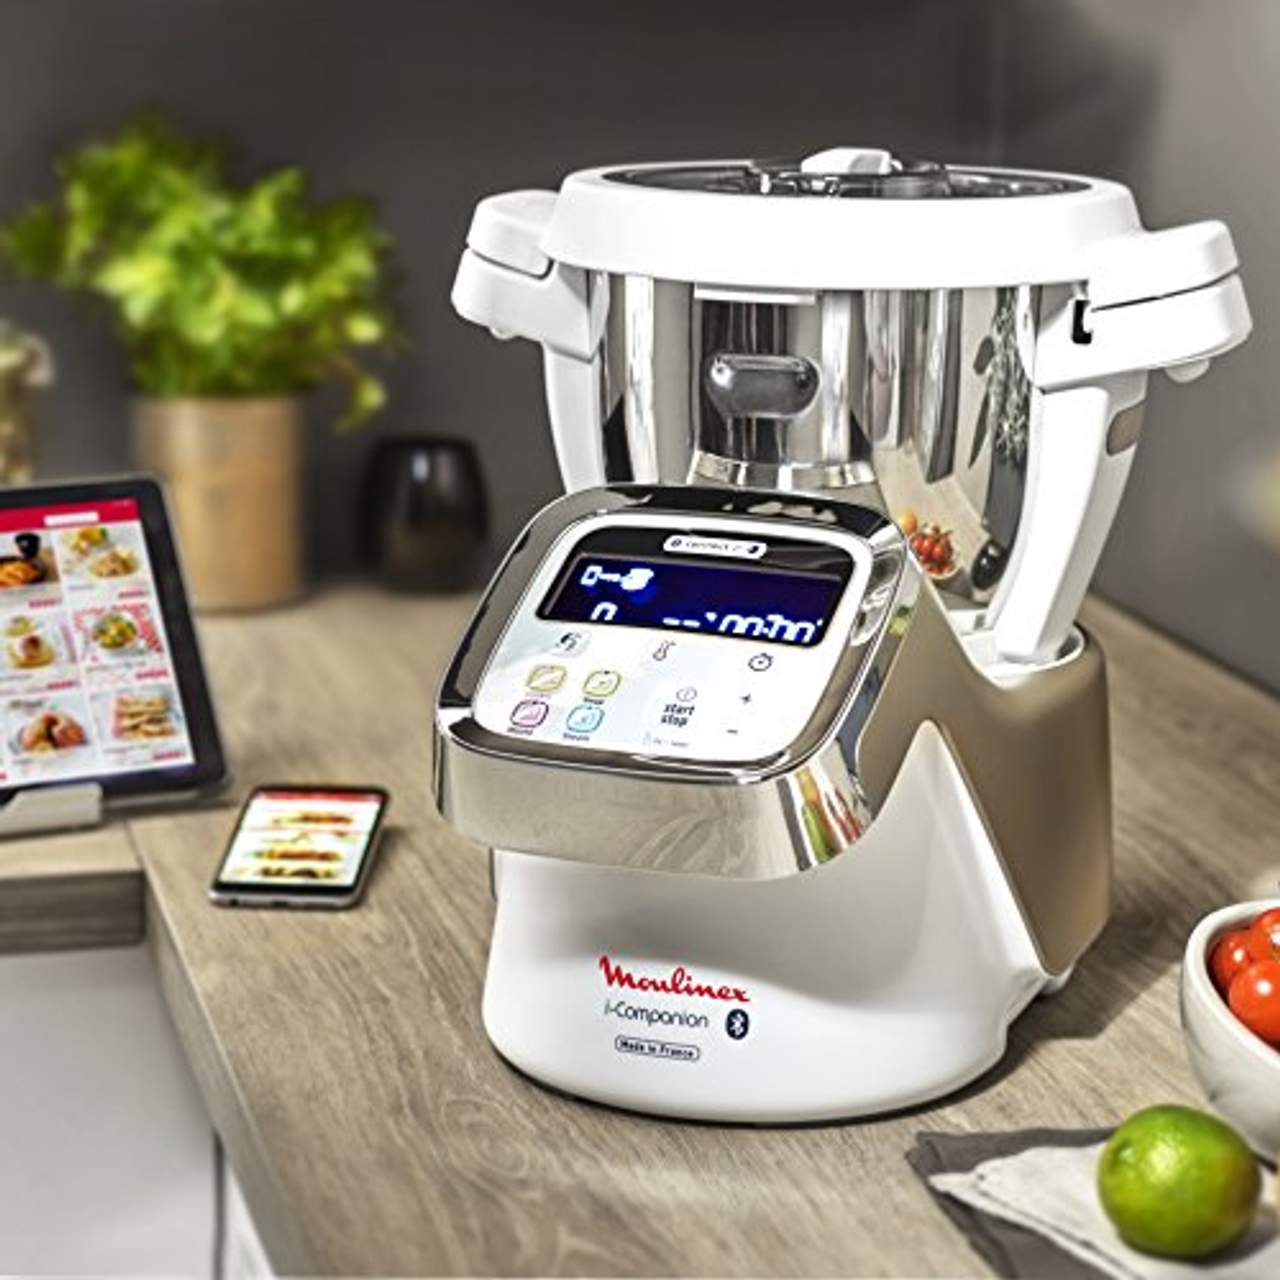 Moulinex hf9001 i-companion Multifunktions-Küchenmaschine Maschine